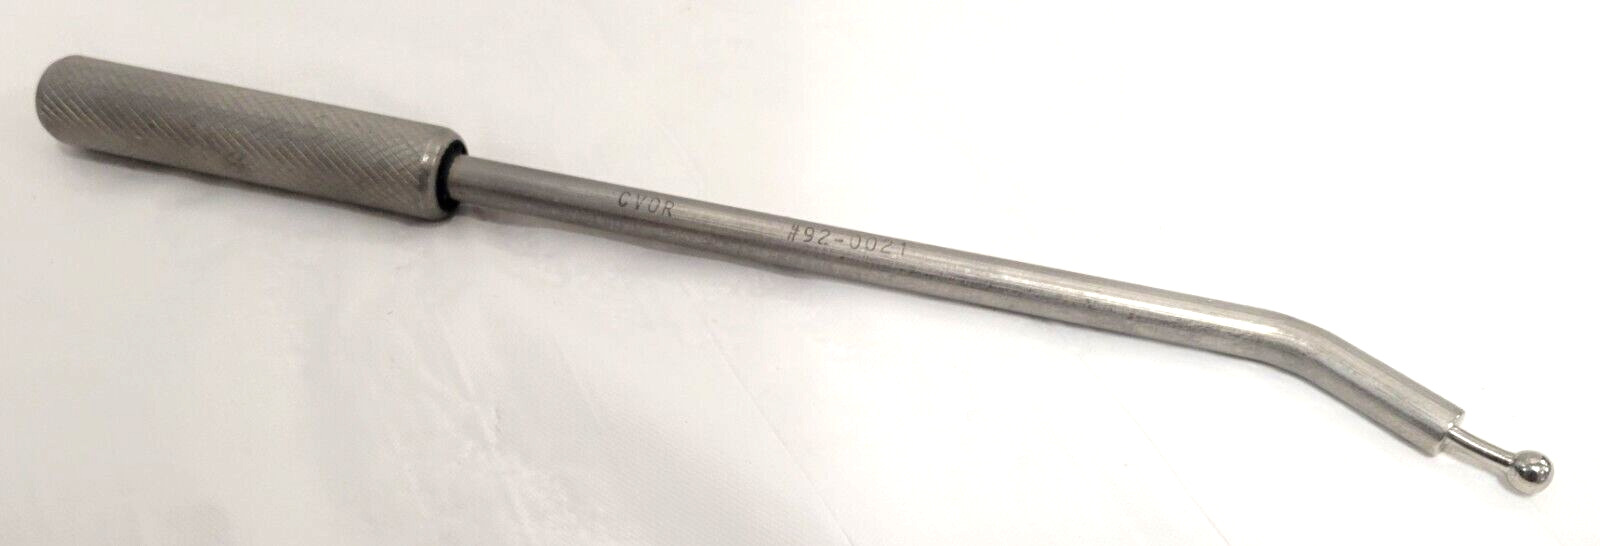 Vintage CVOR 92-0021 Surgical / Medical Instrument / Tool -Cpics4BestDescript